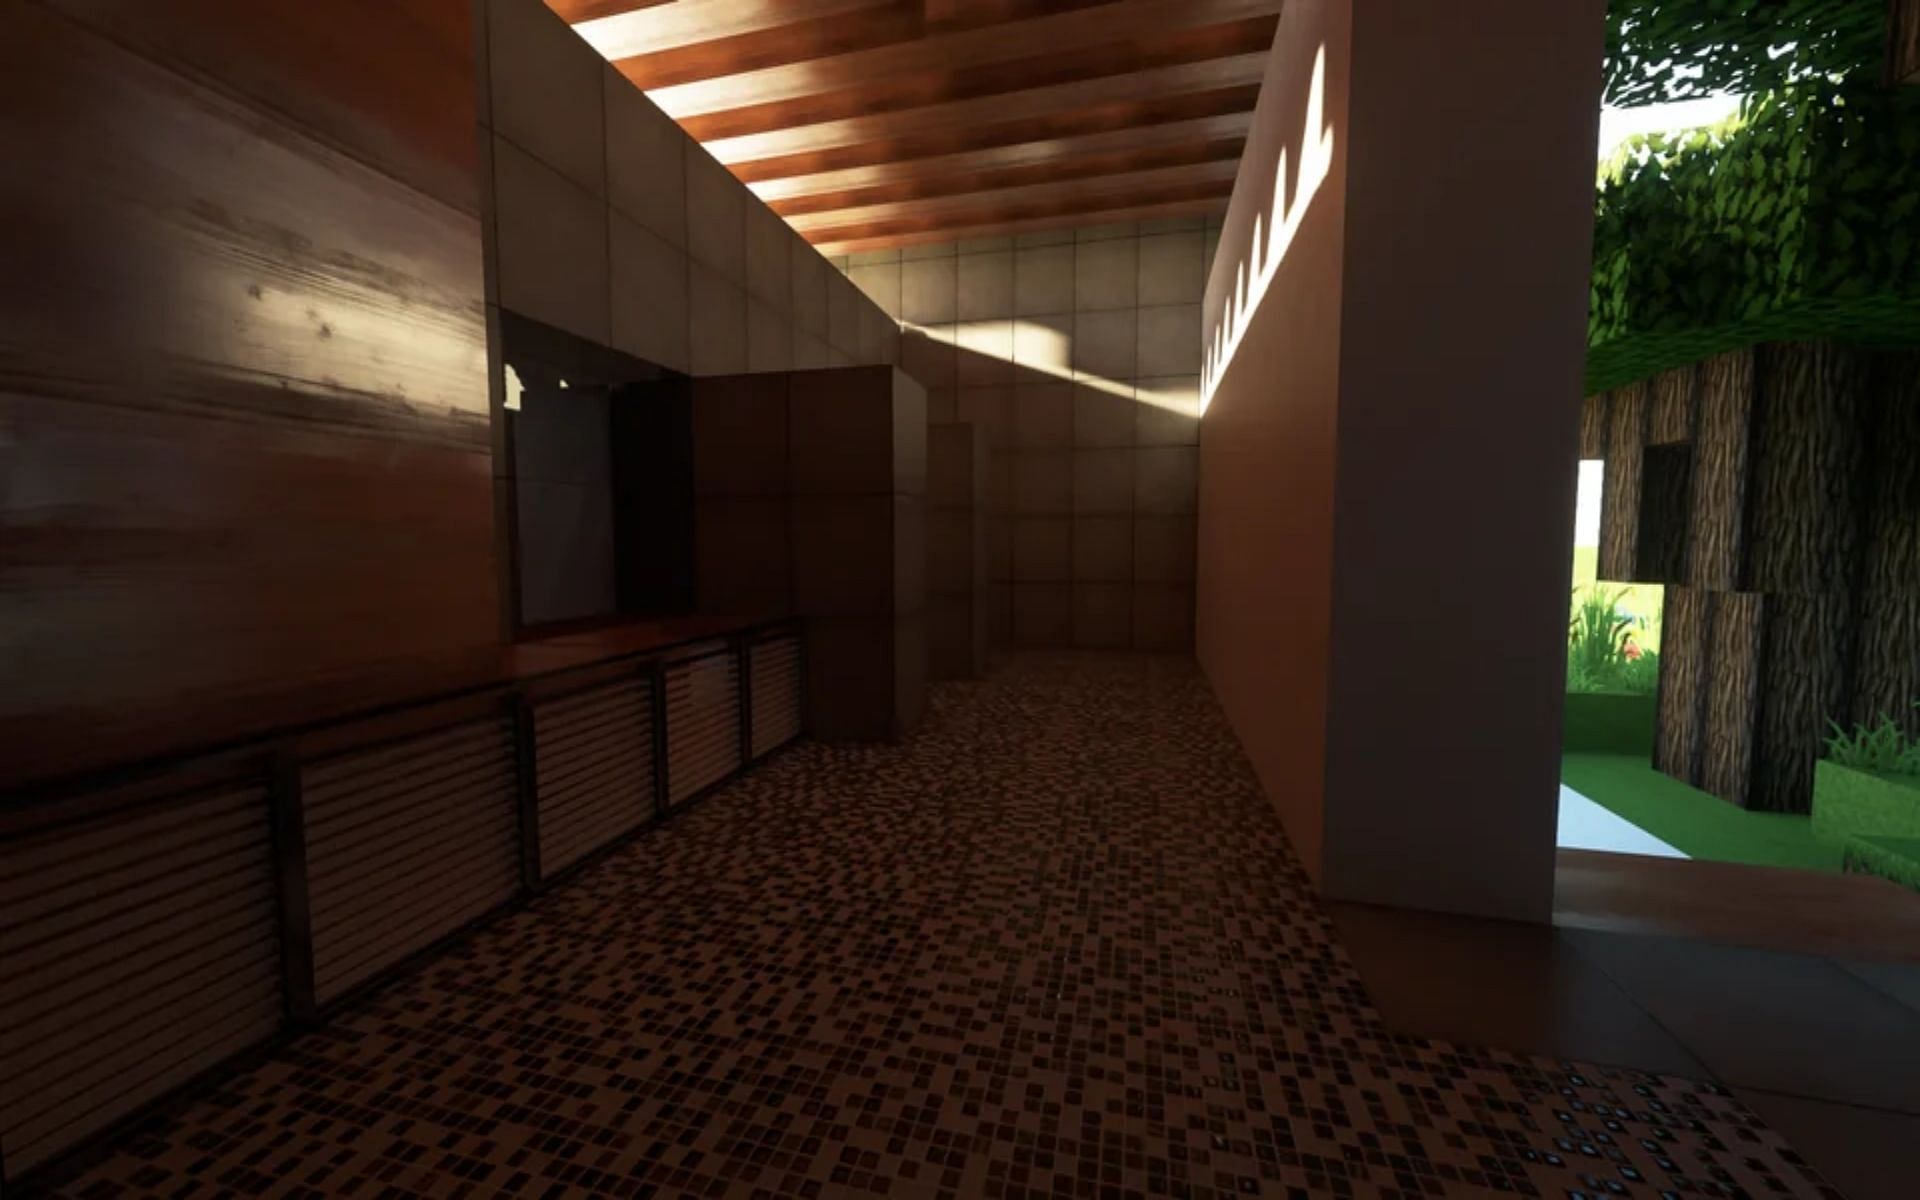 Players can use natural lighting to make their builds seem realistic (Image via reddit.com/u/veggiemitegames)